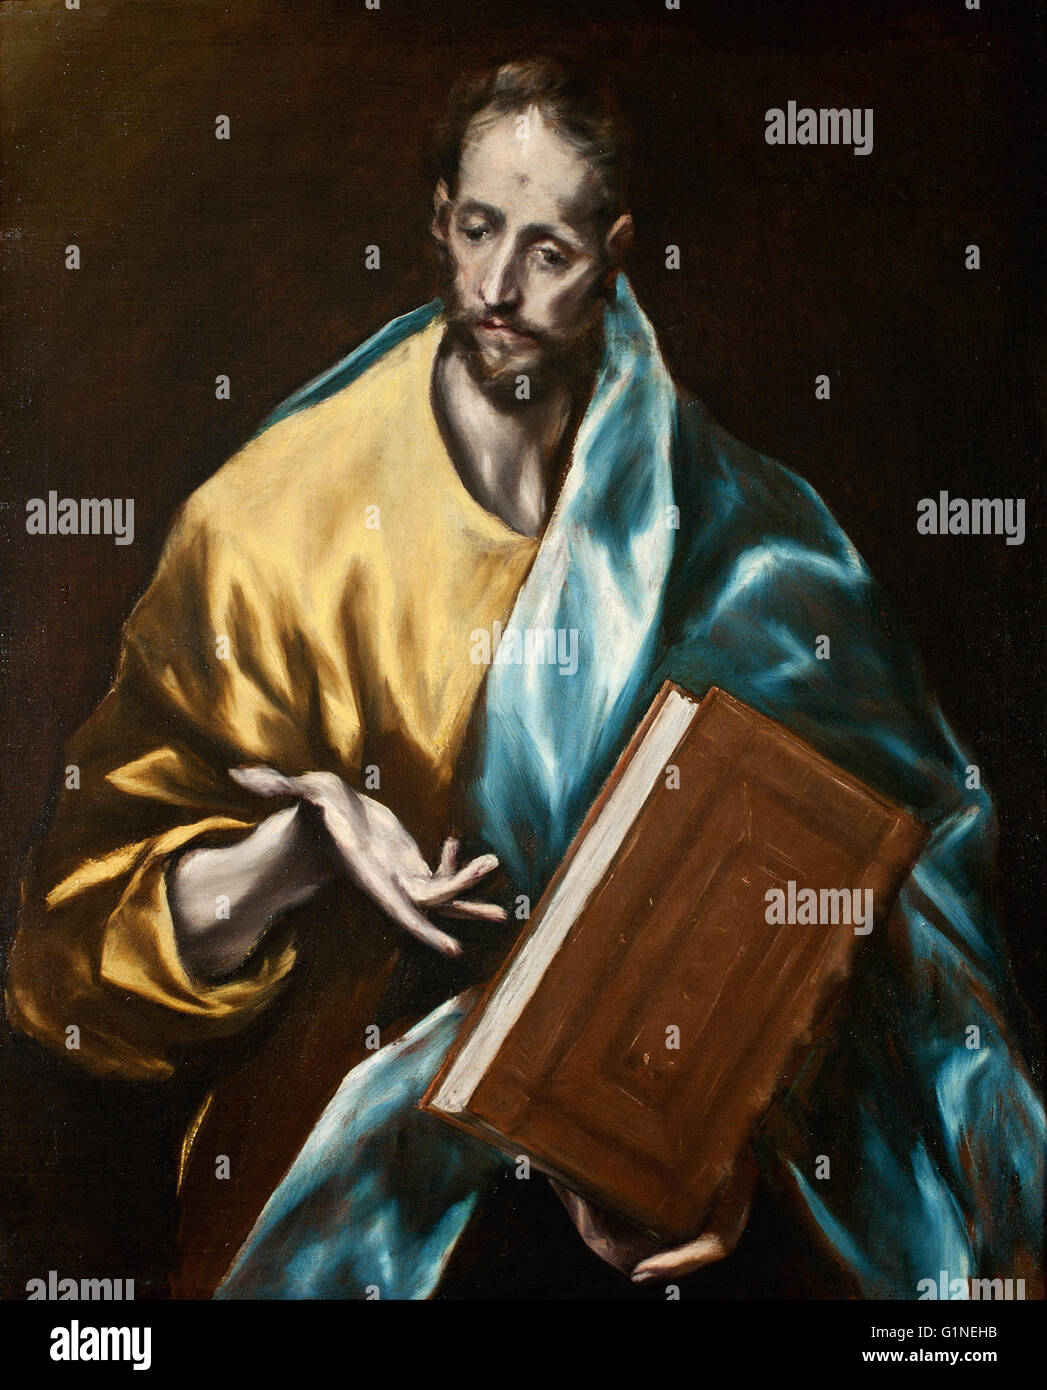 El Greco - St. James the Less  - Museo del Greco Stock Photo